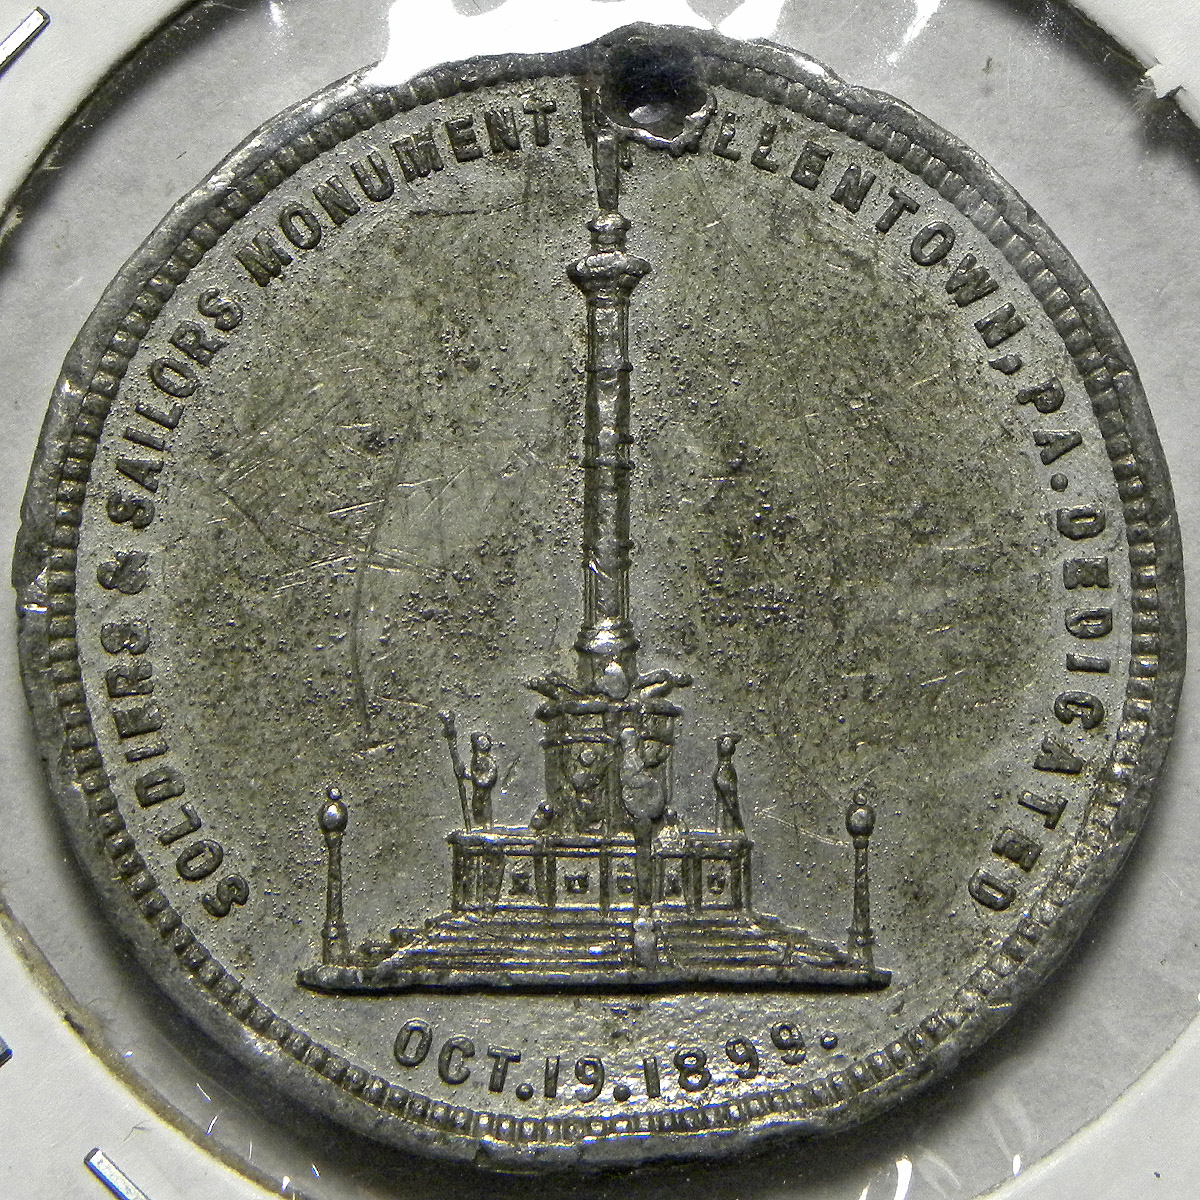 Soldiers & Sailors Monument, Allentown, Pa., 1899 medal (obverse)